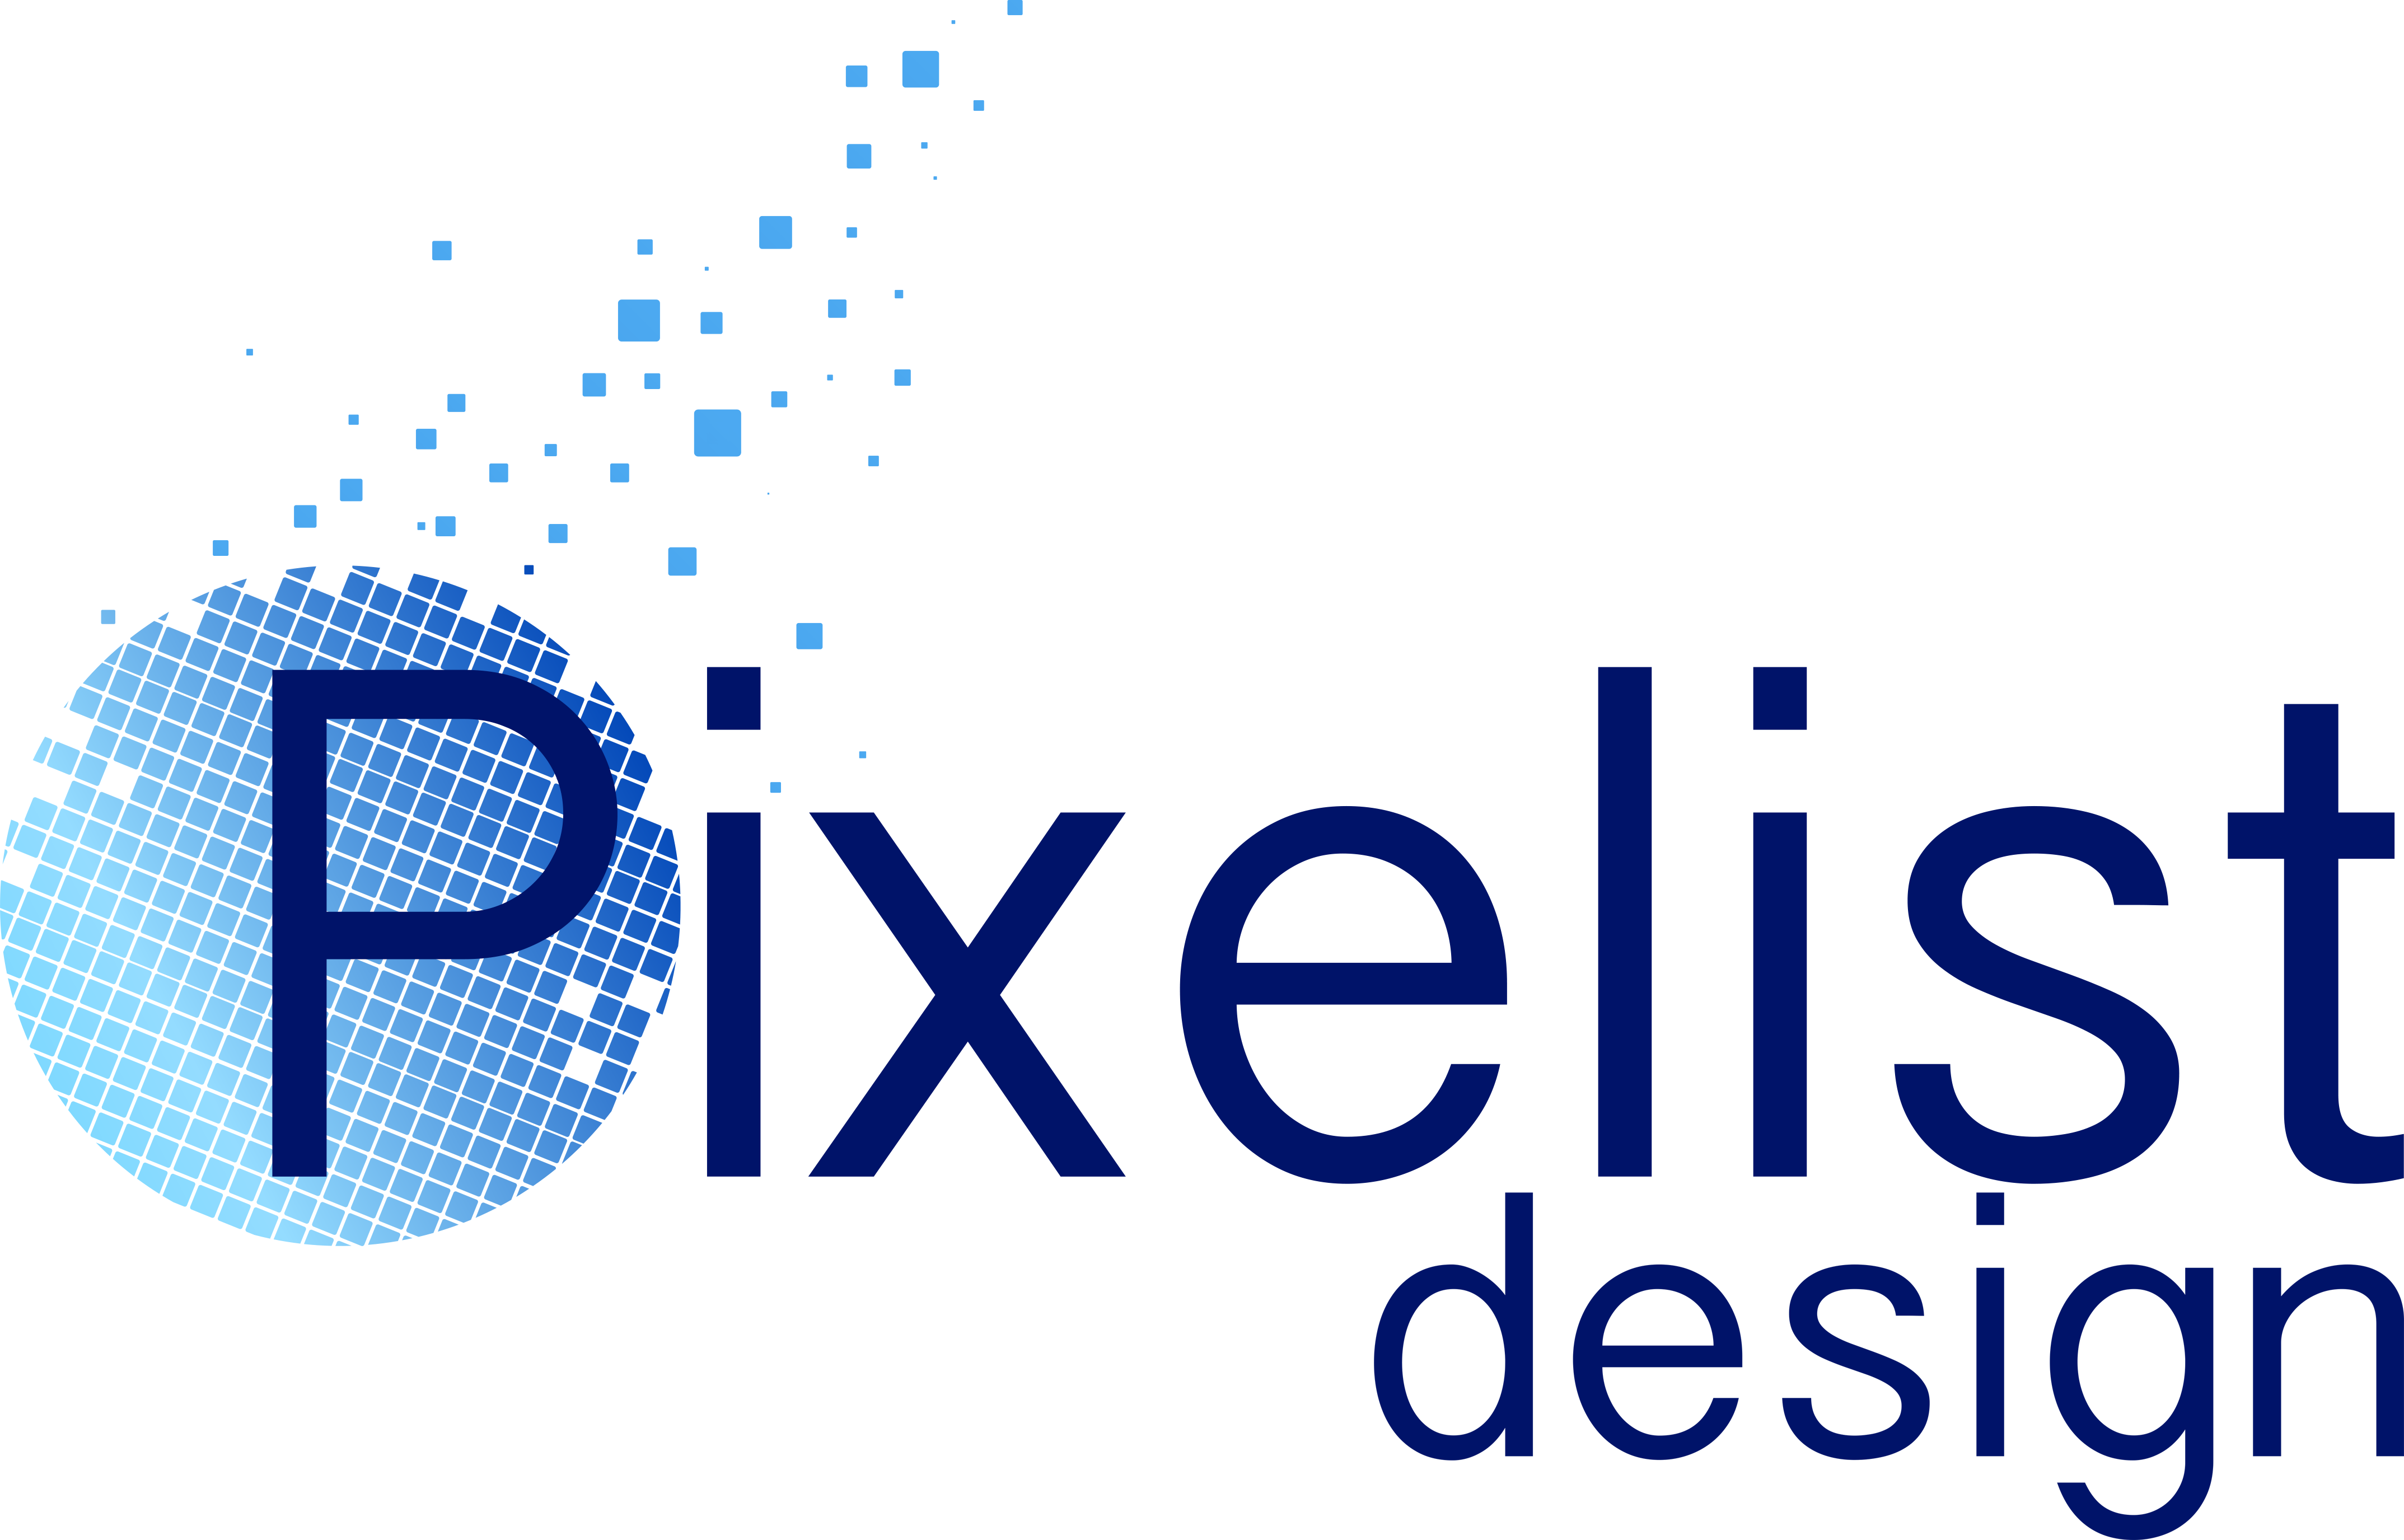 pixelista logo